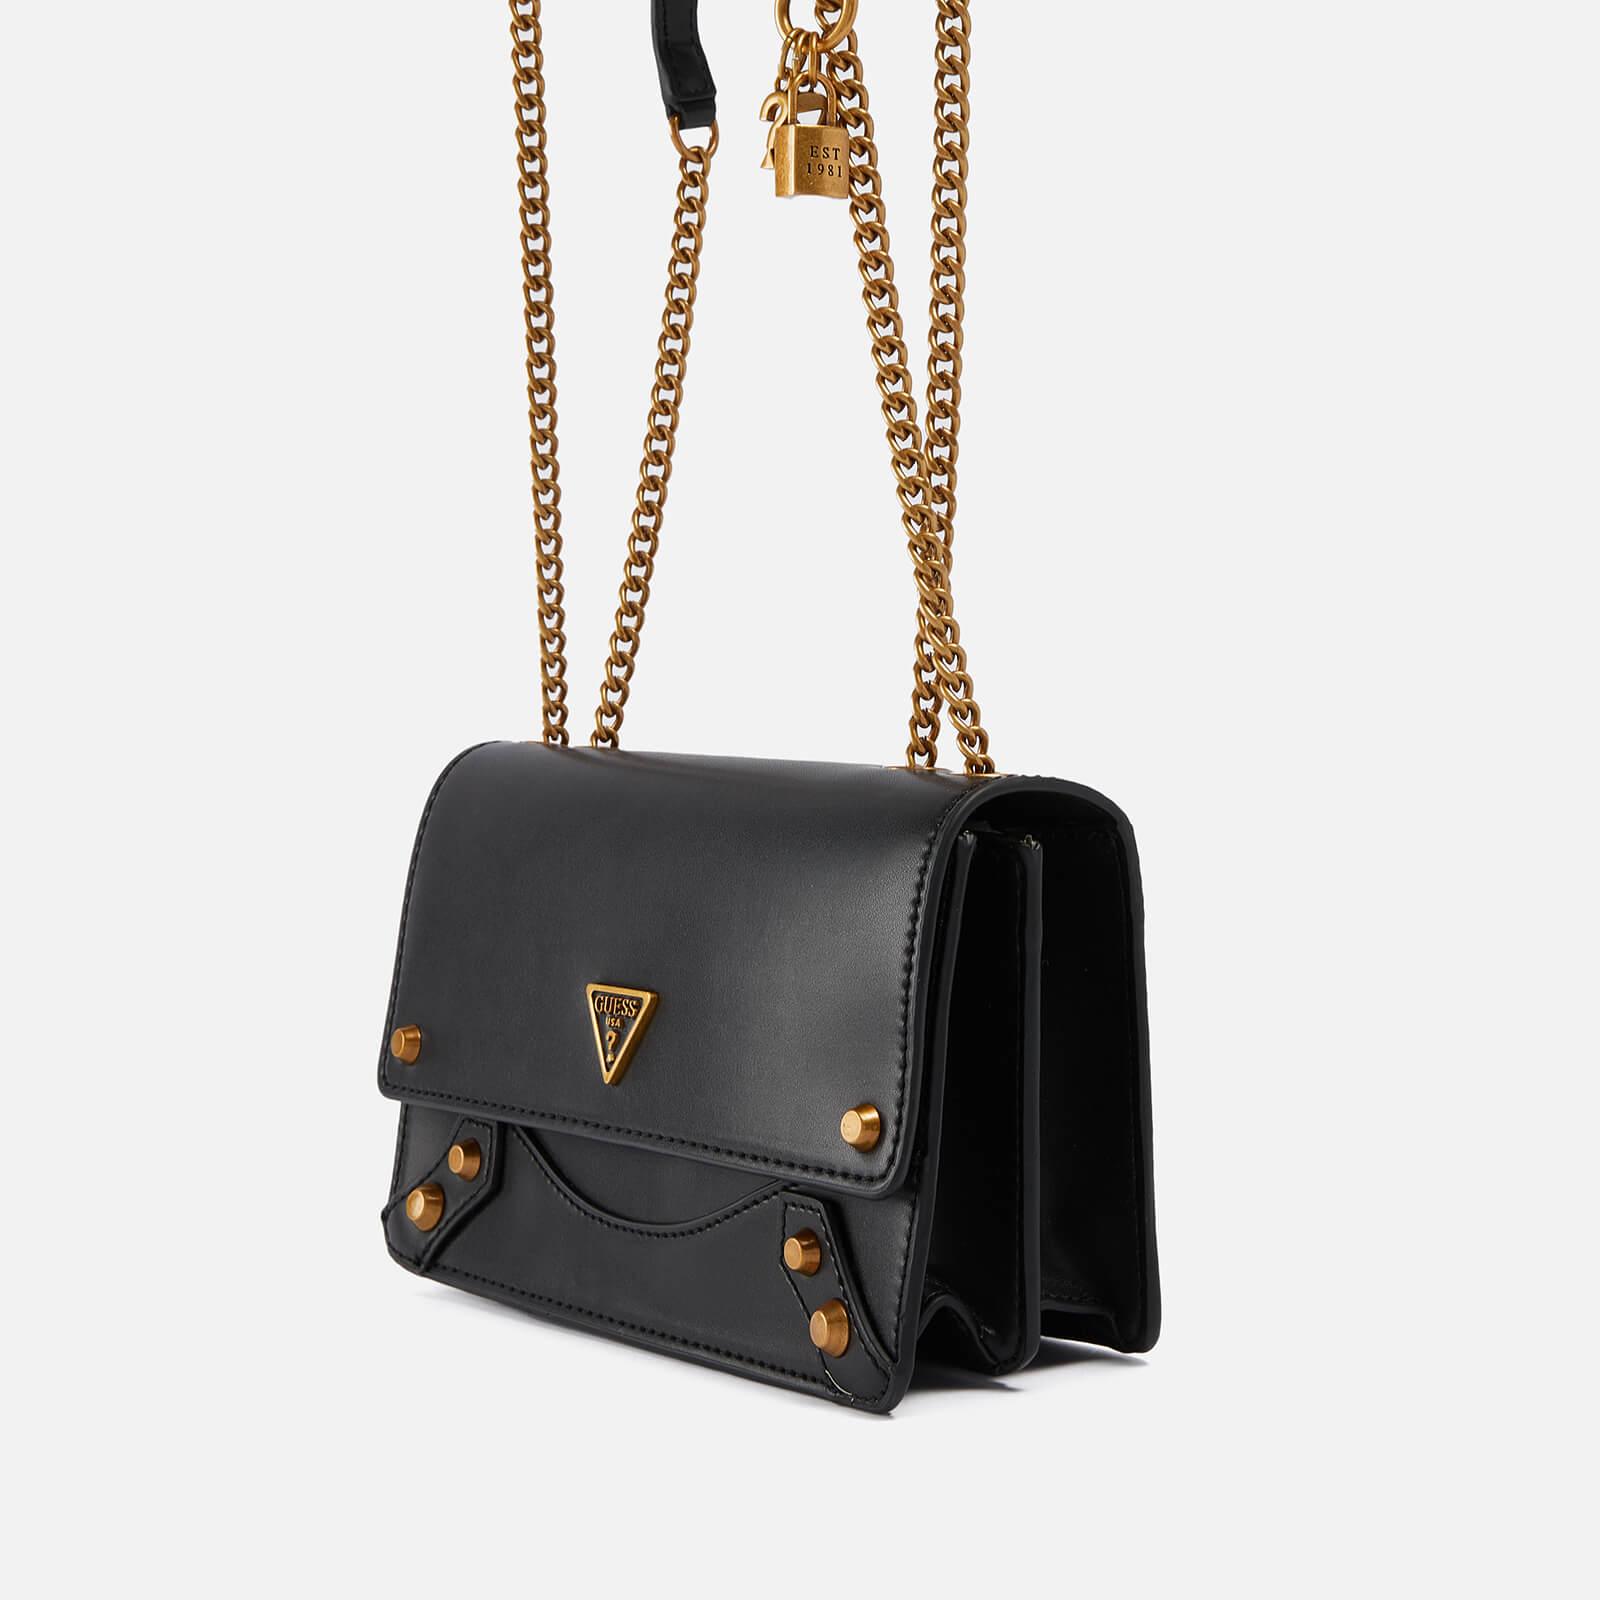 Guess leather handbag - Gem